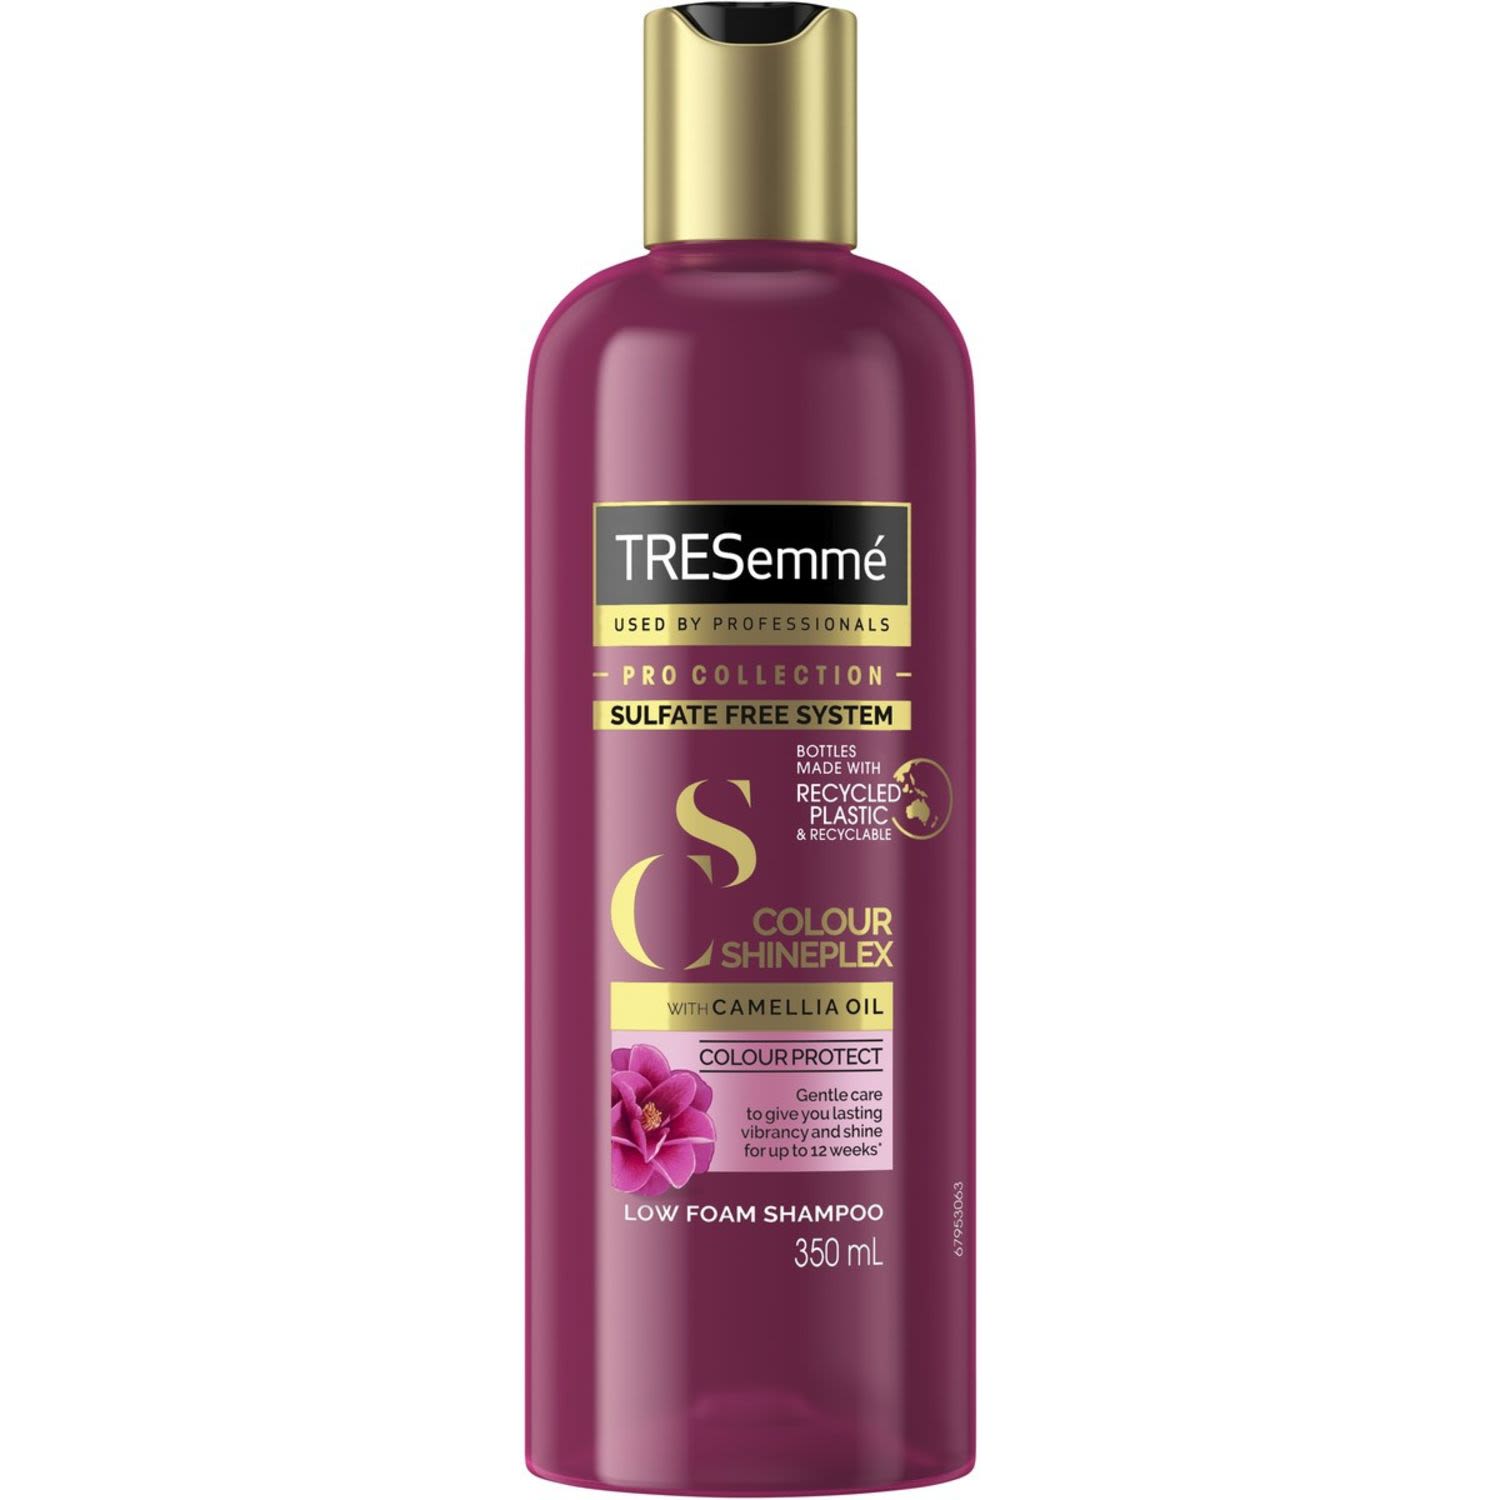 Tresemmé Collection Colour Shineplex Sulphate Free Shampoo | IGA Shop Online